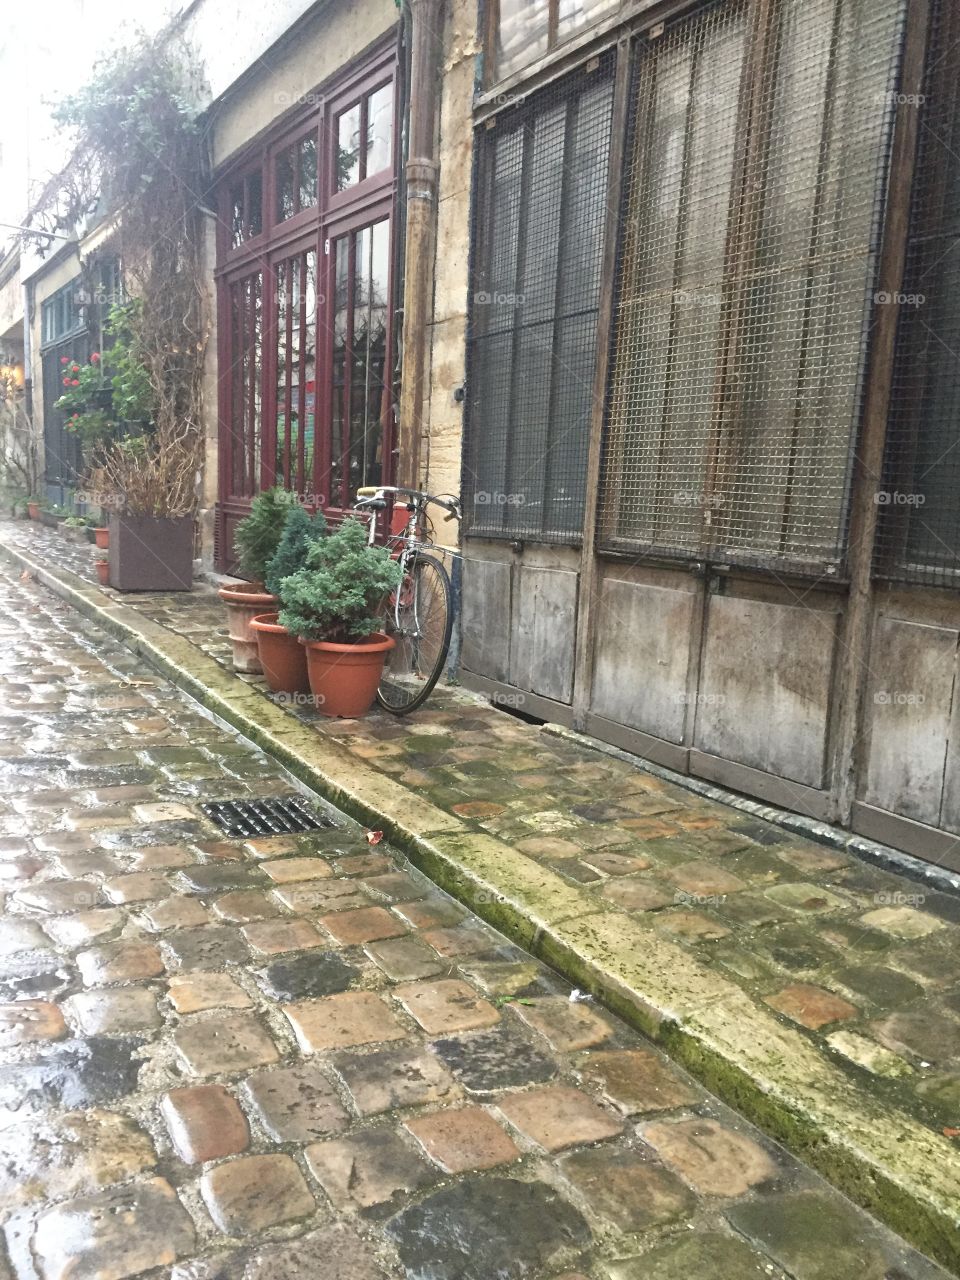 Bicycle on the rainy cobblestone street of Paris 